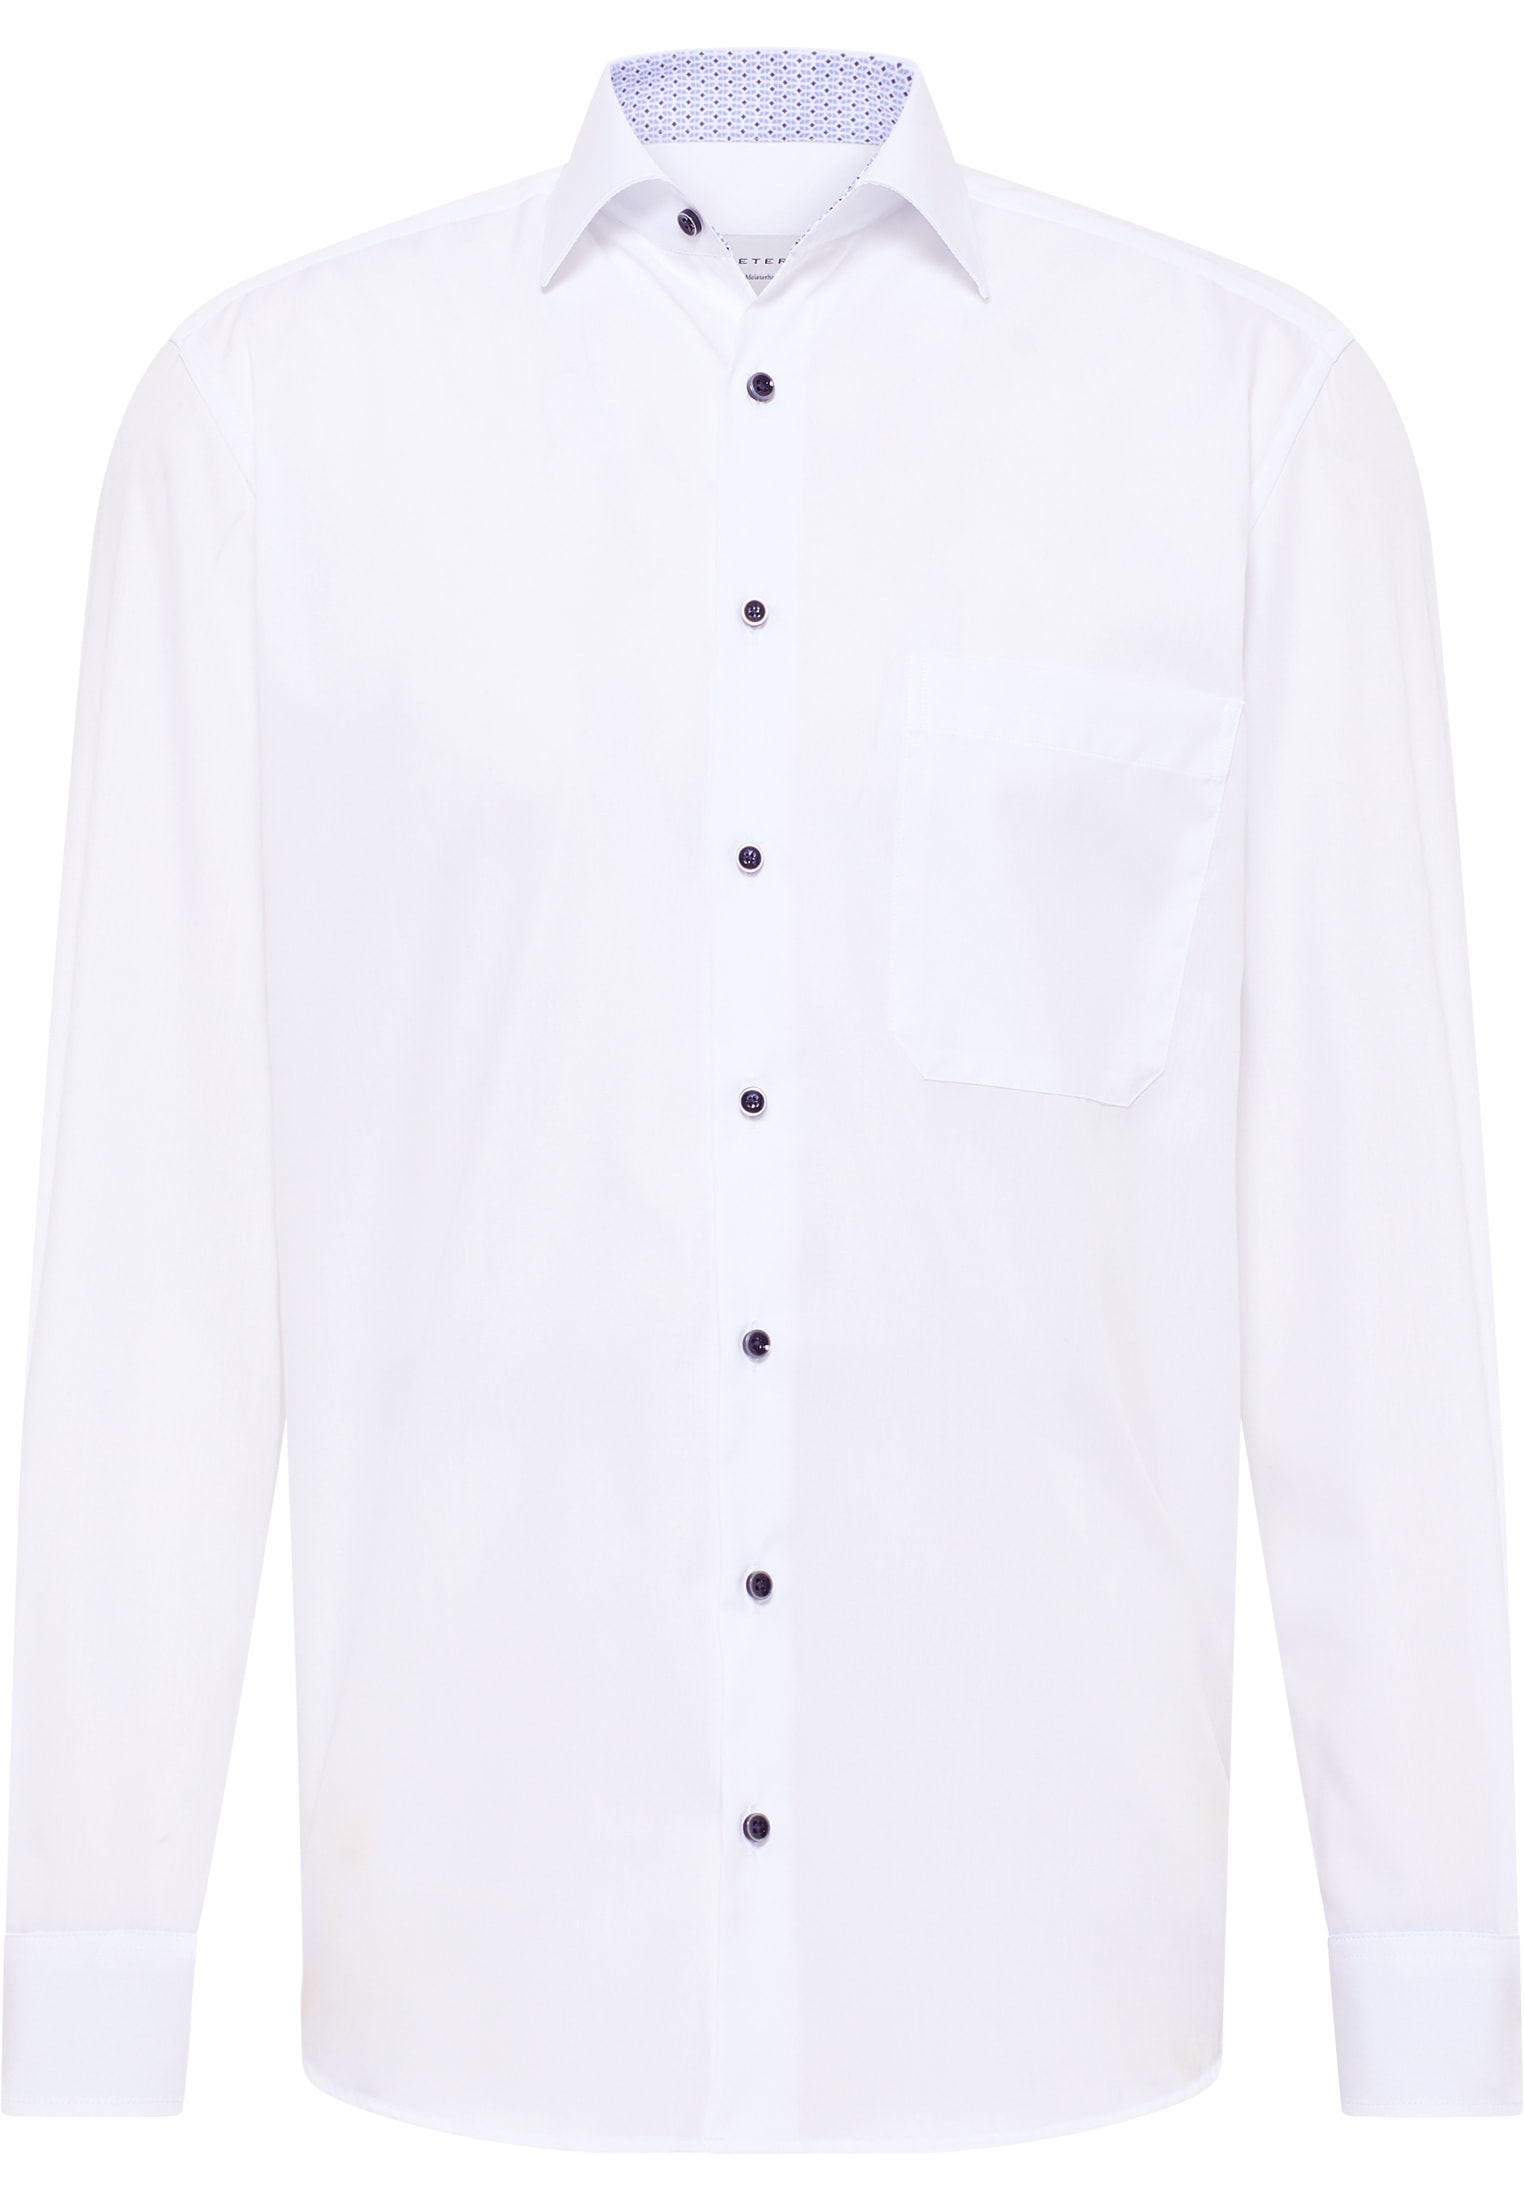 COMFORT FIT Original Shirt | Langarm unifarben | in | weiß weiß | 1SH12864-00-01-48-1/1 48